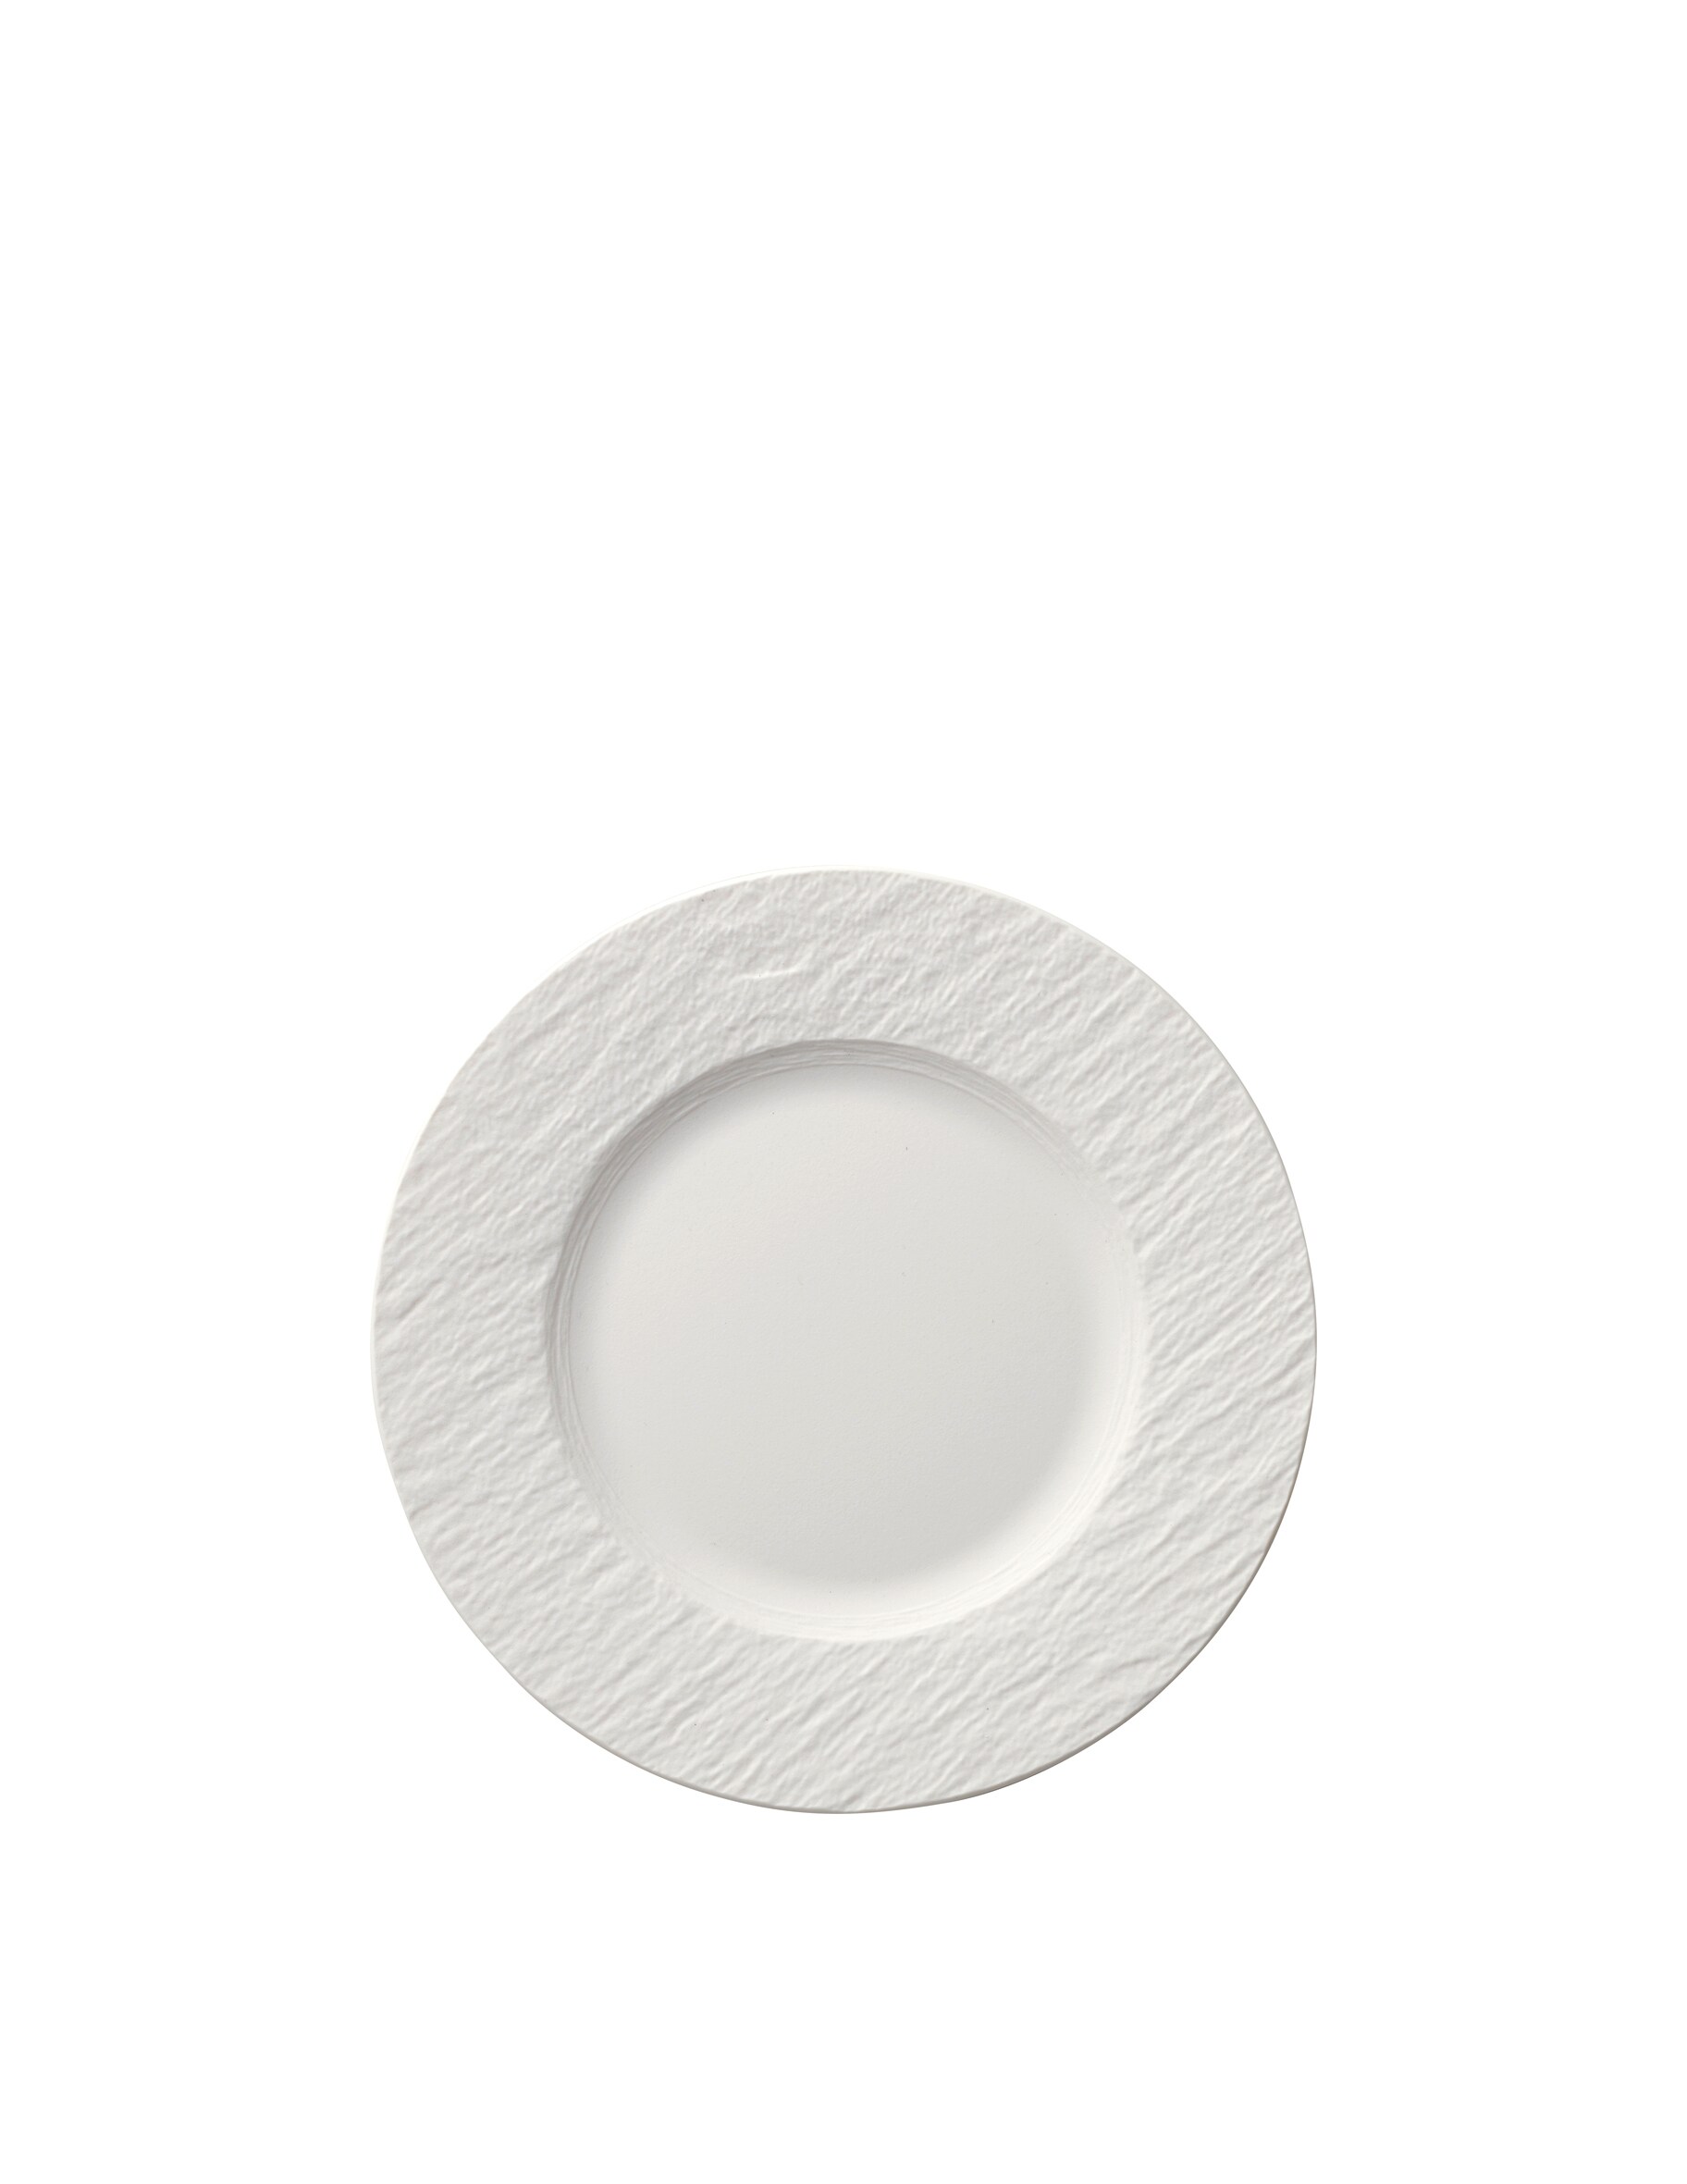 Тарелка для салата Manufacture Rock Blanc 22см Villeroy & Boch тарелка для макарон manufacture rock blanc 29см villeroy